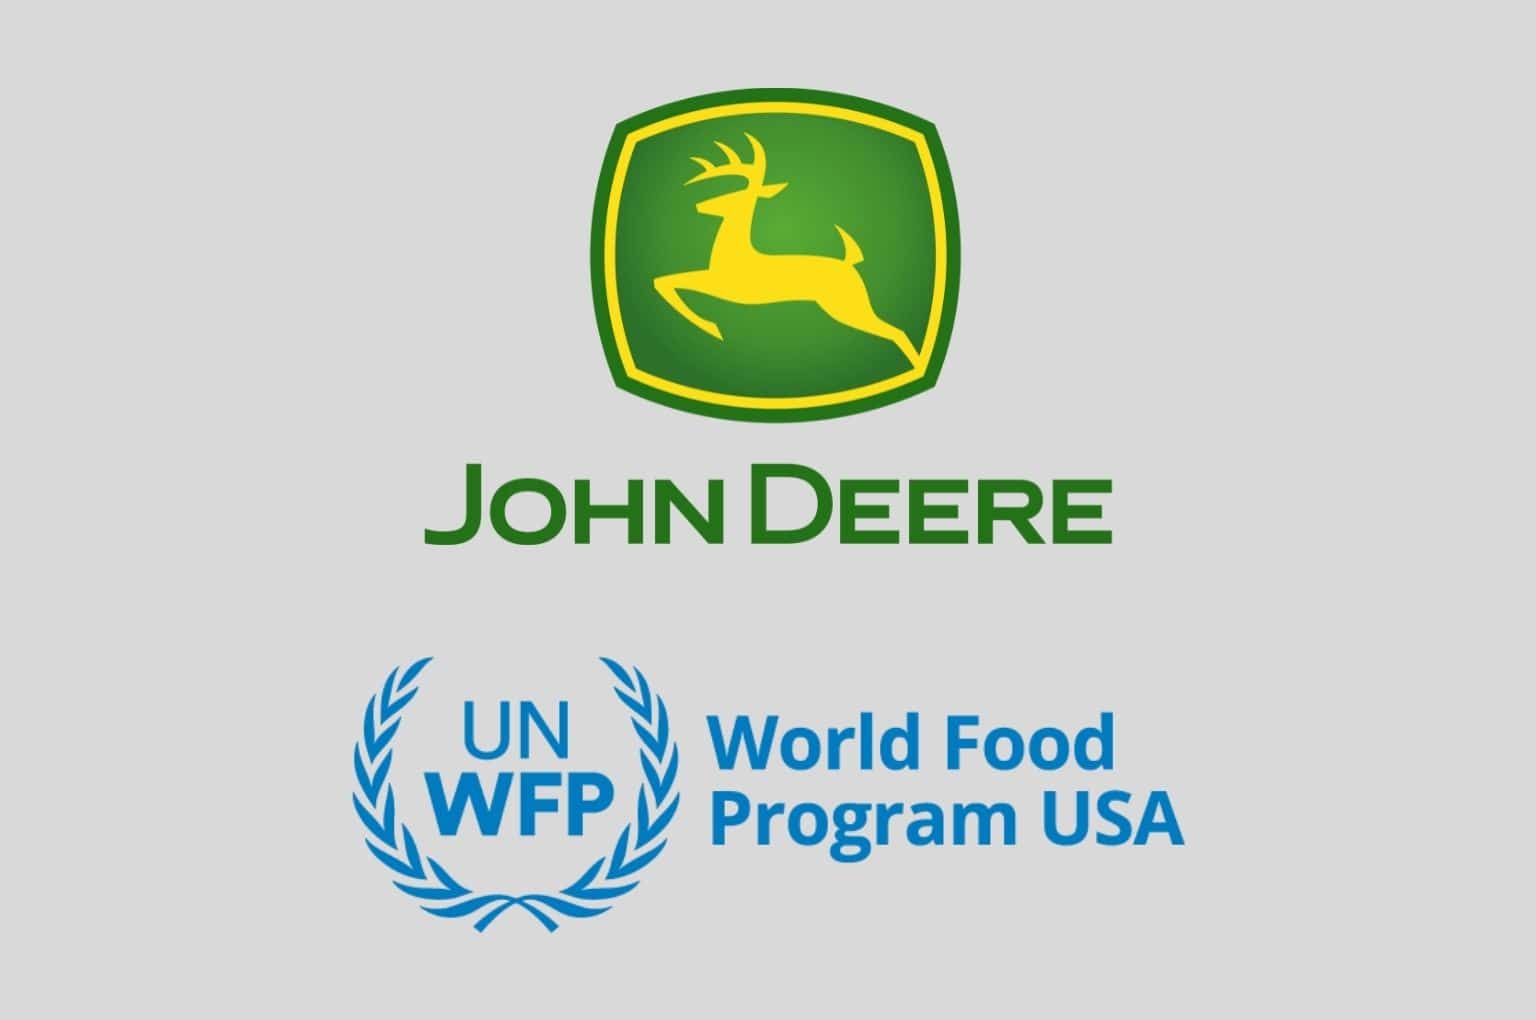 World Food Program USA receives $1 million from the John Deere Foundation